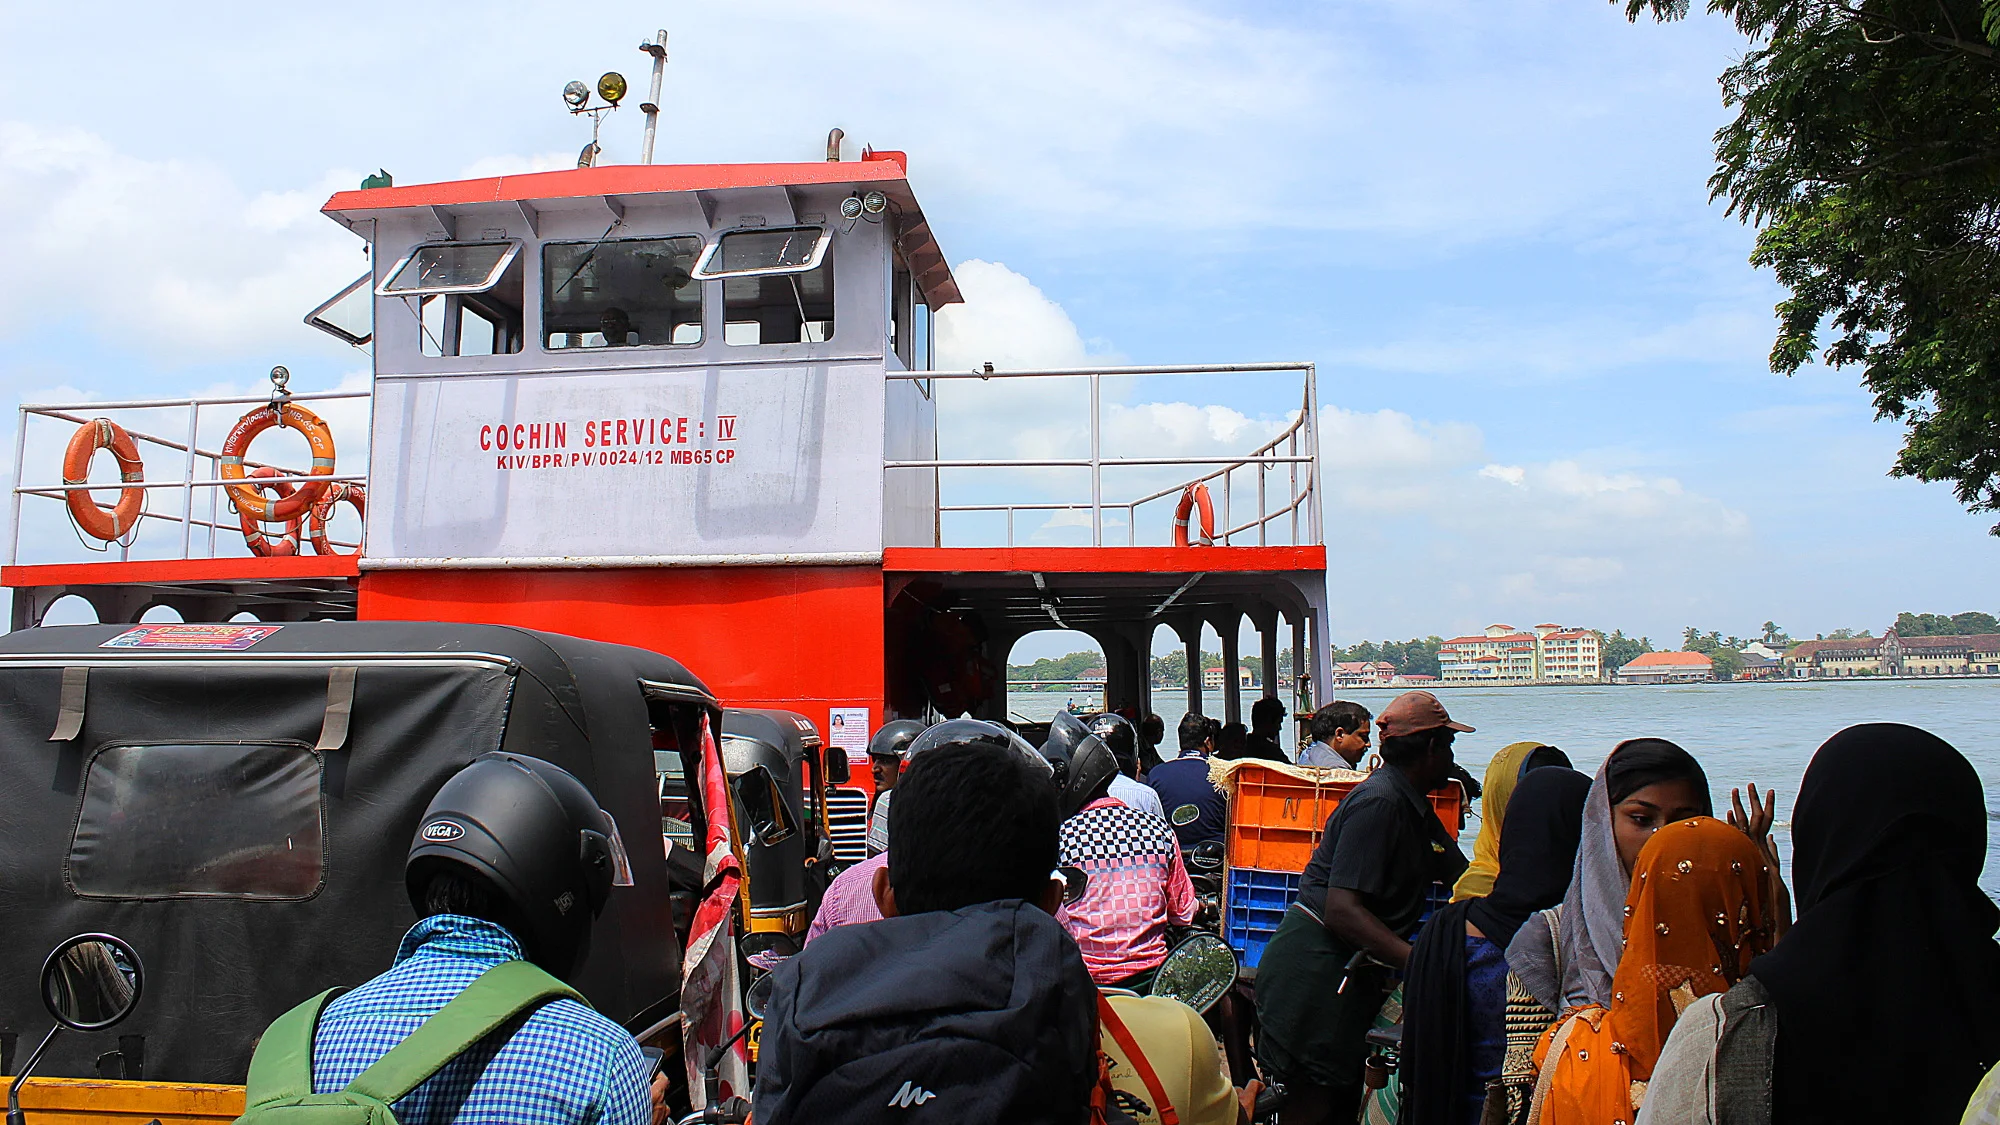 Cochin Service ferry to Fort Kochi, the touristy island of Kochi.